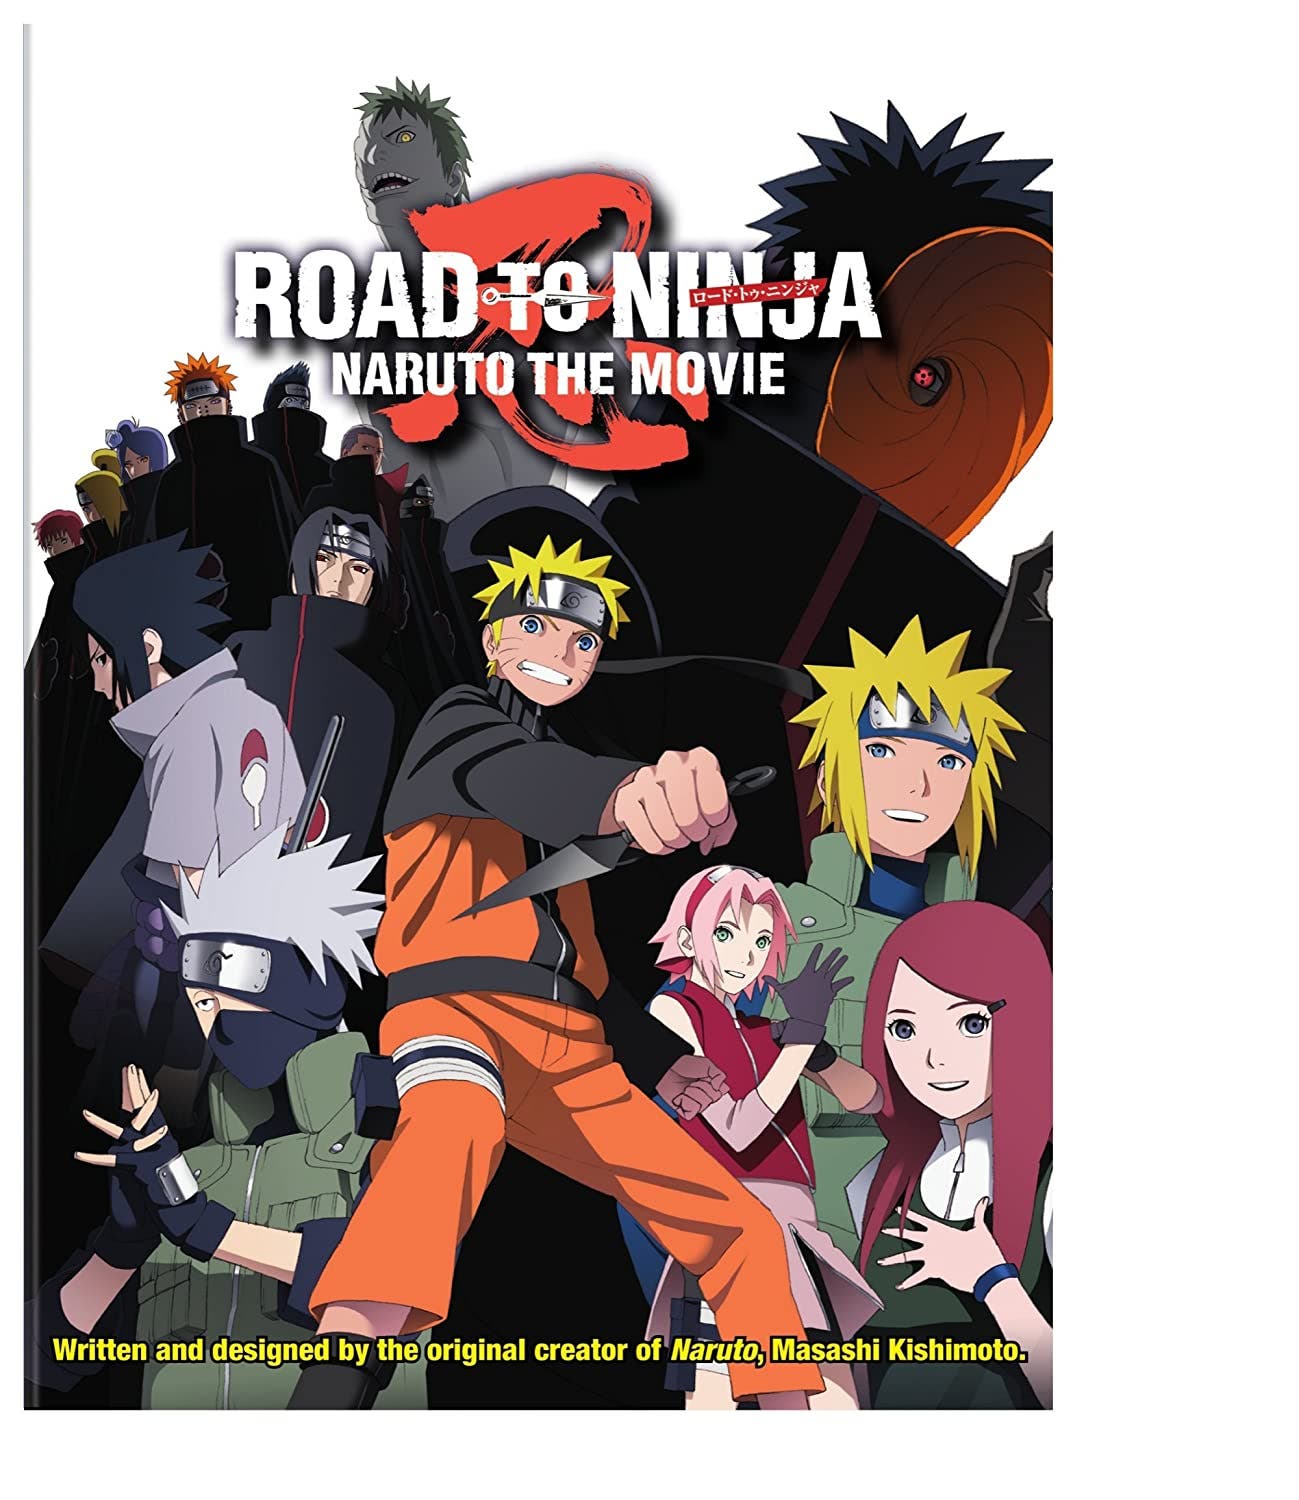 Orden cronológico para ver Naruto: serie anime, películas y OVAs